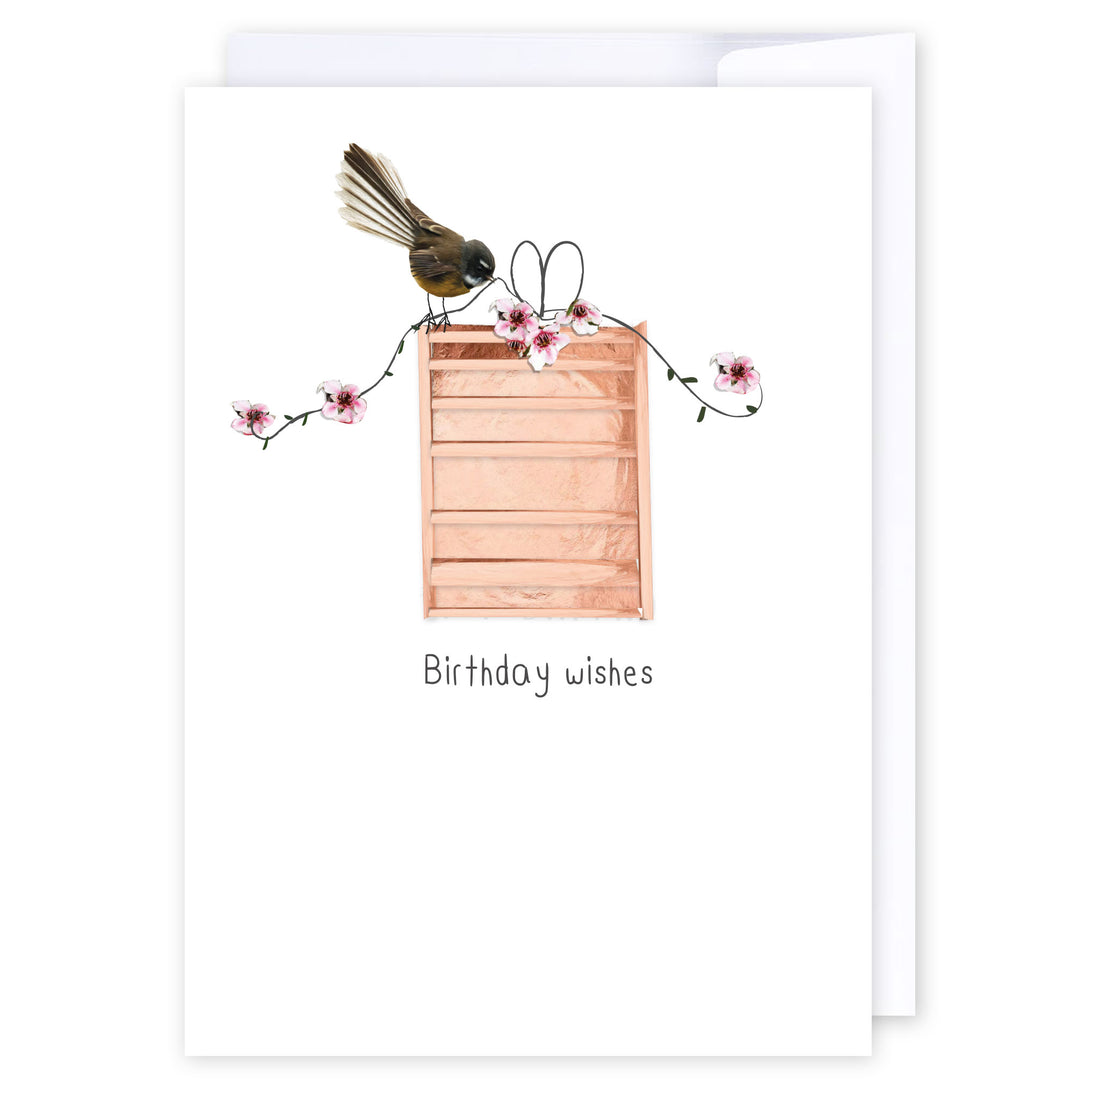 Birthday wishes Fantail